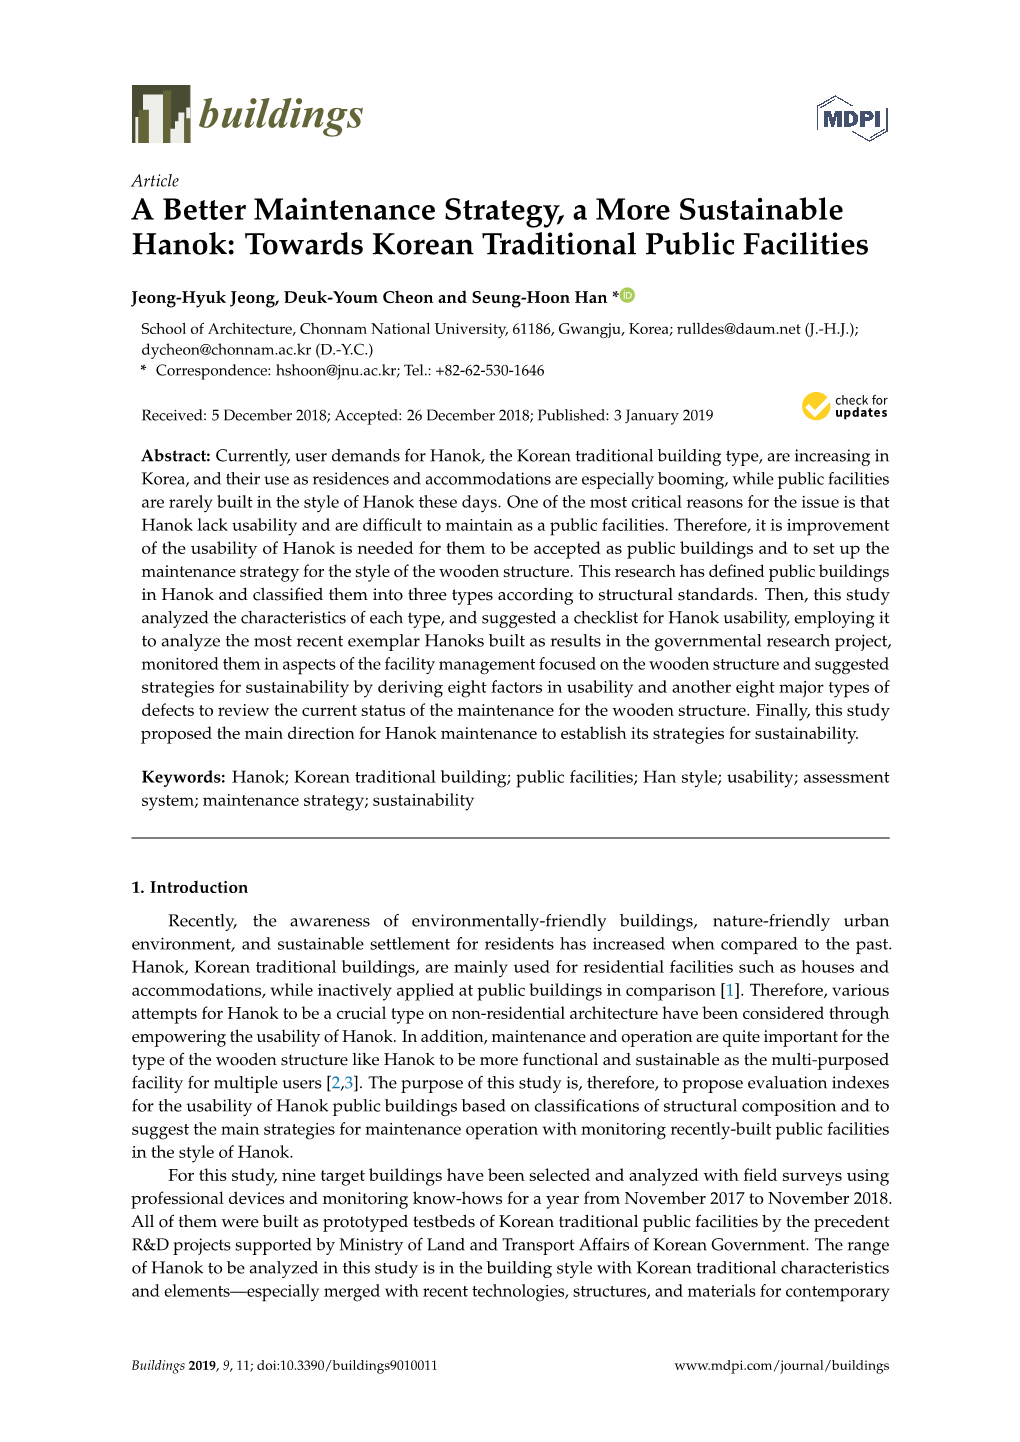 A Better Maintenance Strategy, a More Sustainable Hanok: Towards Korean Traditional Public Facilities